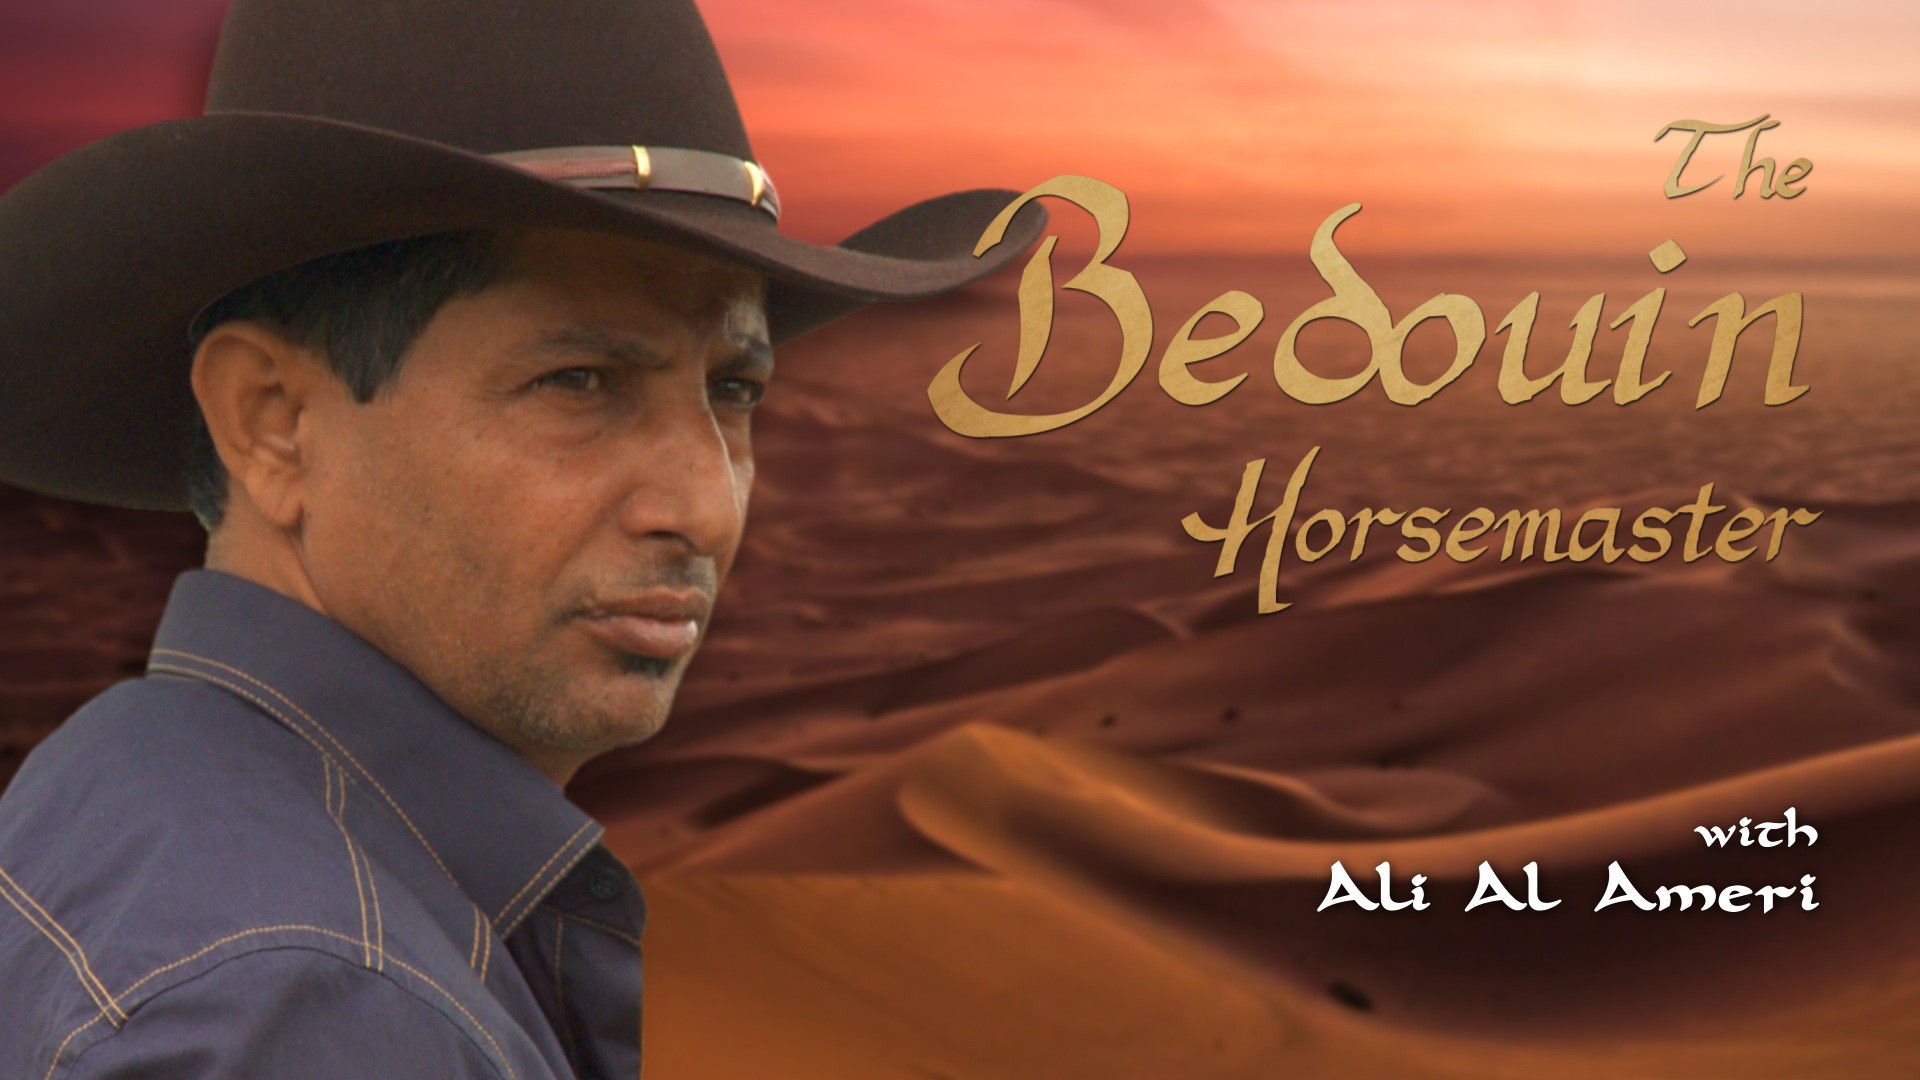 Bedouin Horsemaster, UK, directed by Eric Averkiou